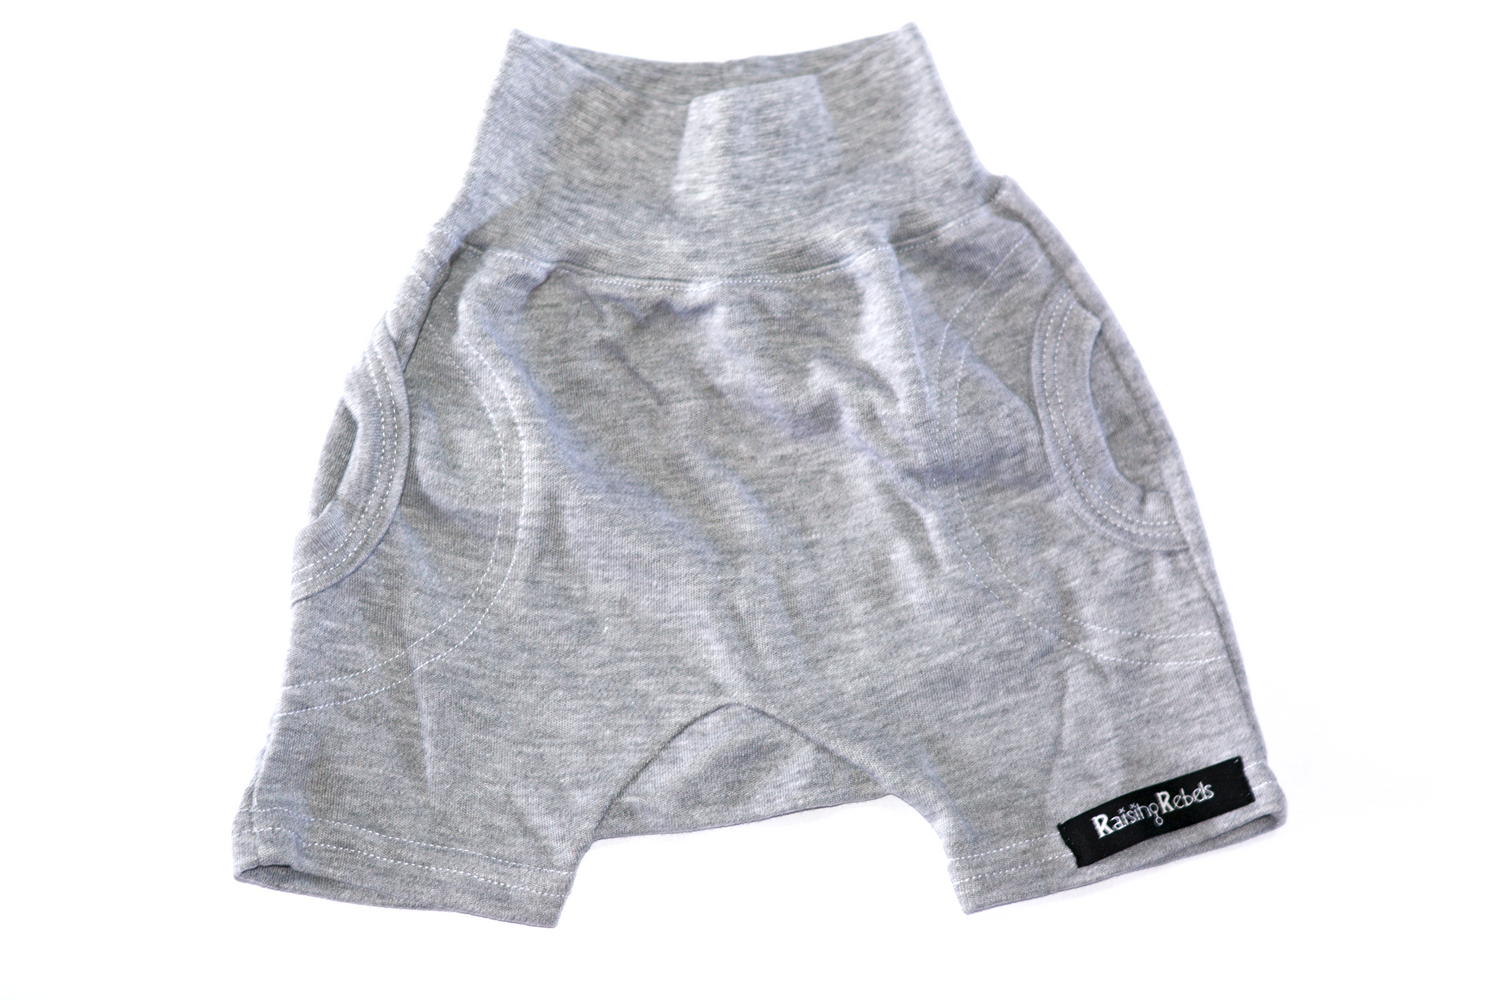 Grey Baby Shorts with Pockets